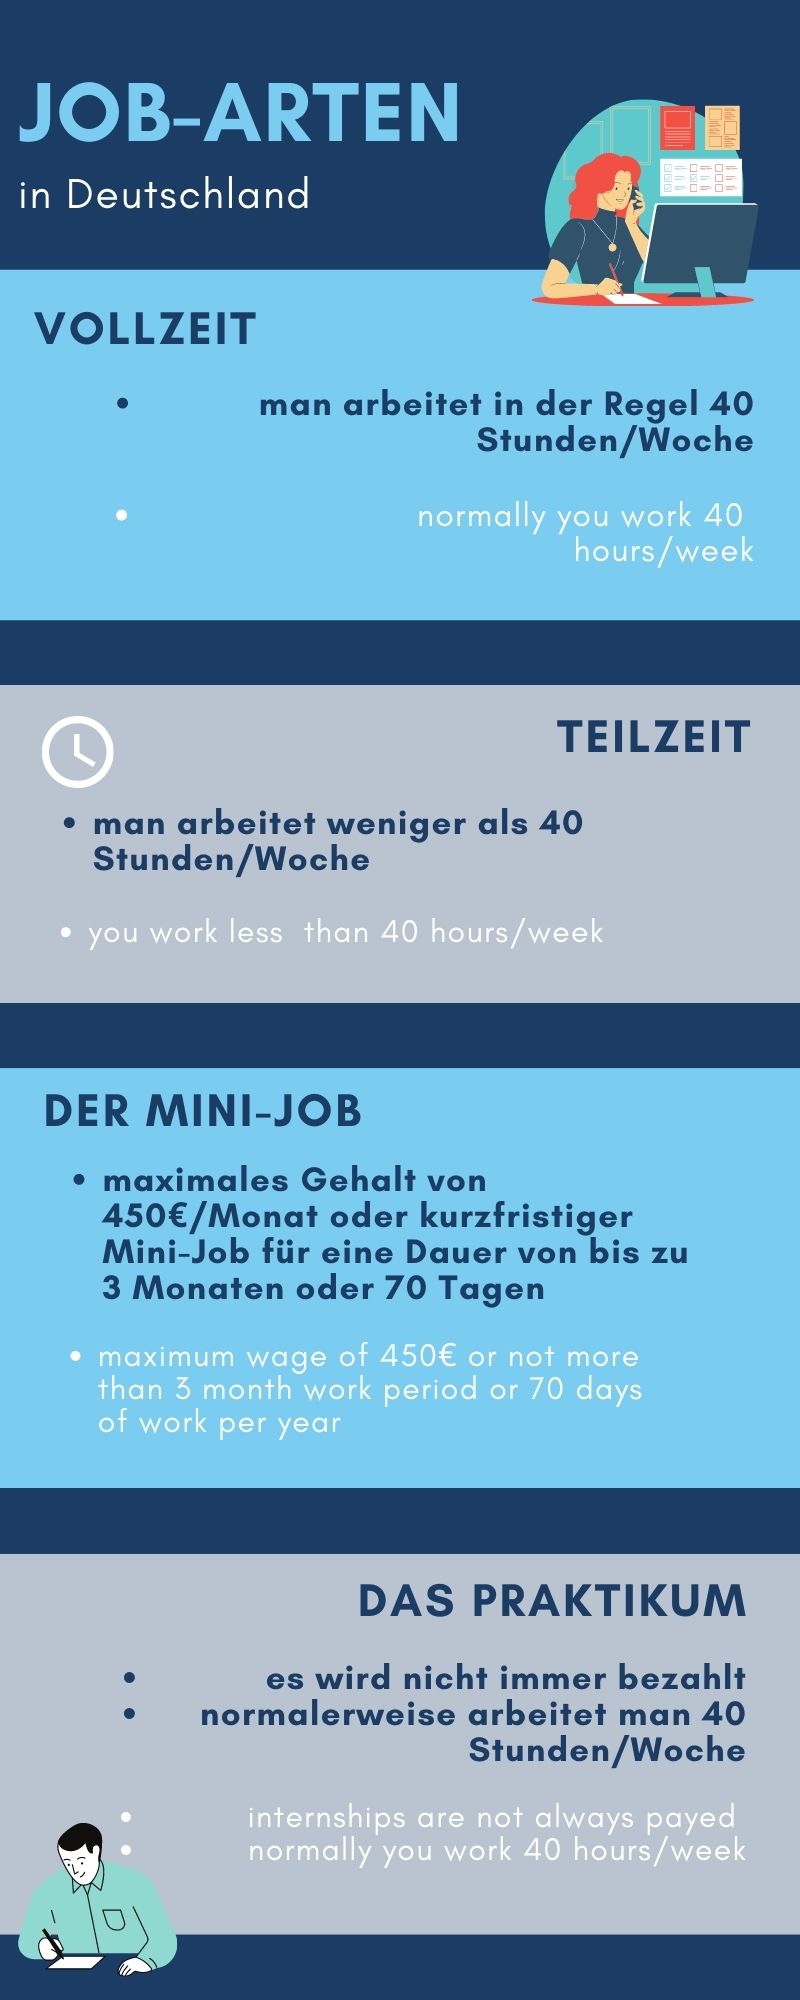 Die verschiedenen Job-Arten in Deutschland